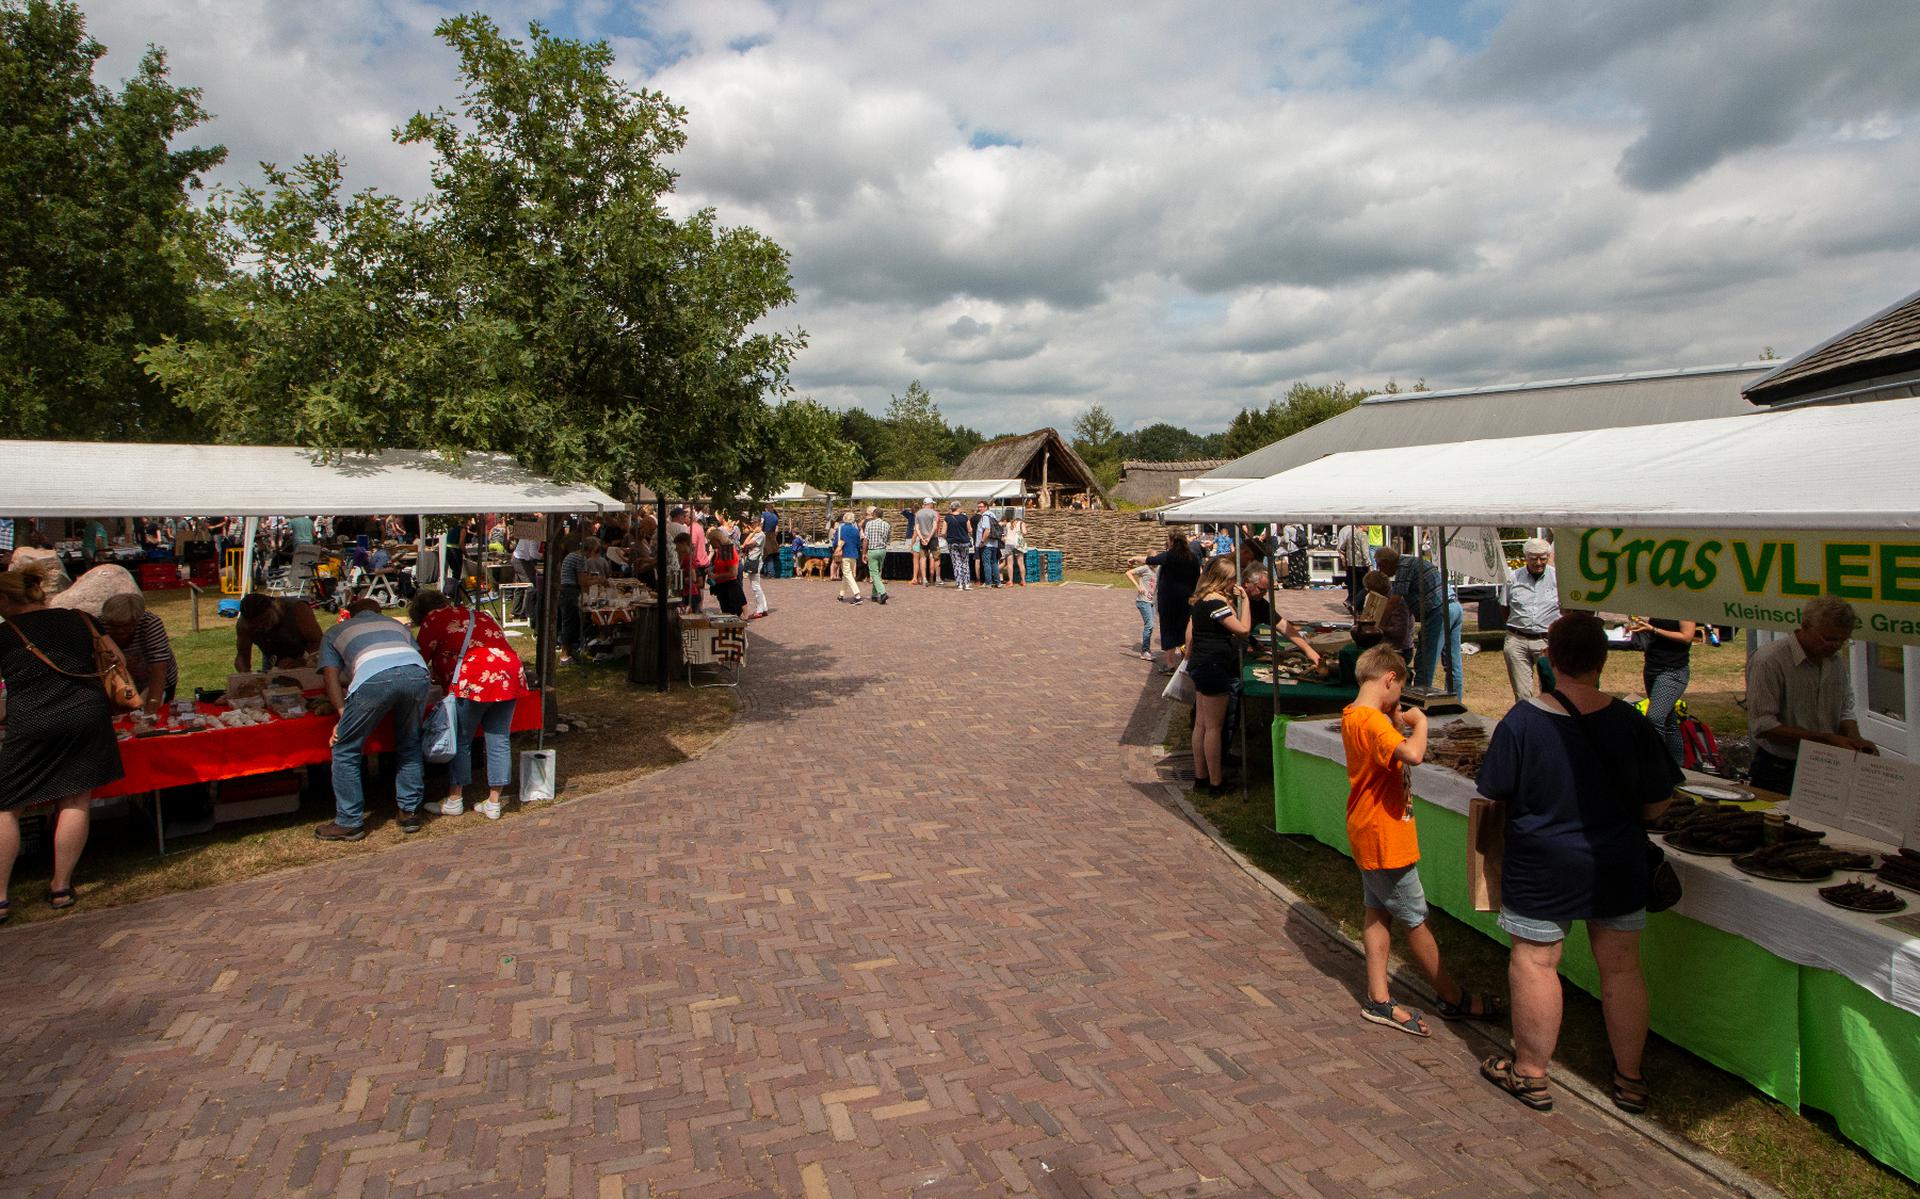 Oertijdmarkt pindah dari Borger ke Emmen.  80 peserta pameran pindah ke lokasi bersepeda di De Meerdijk Grounds